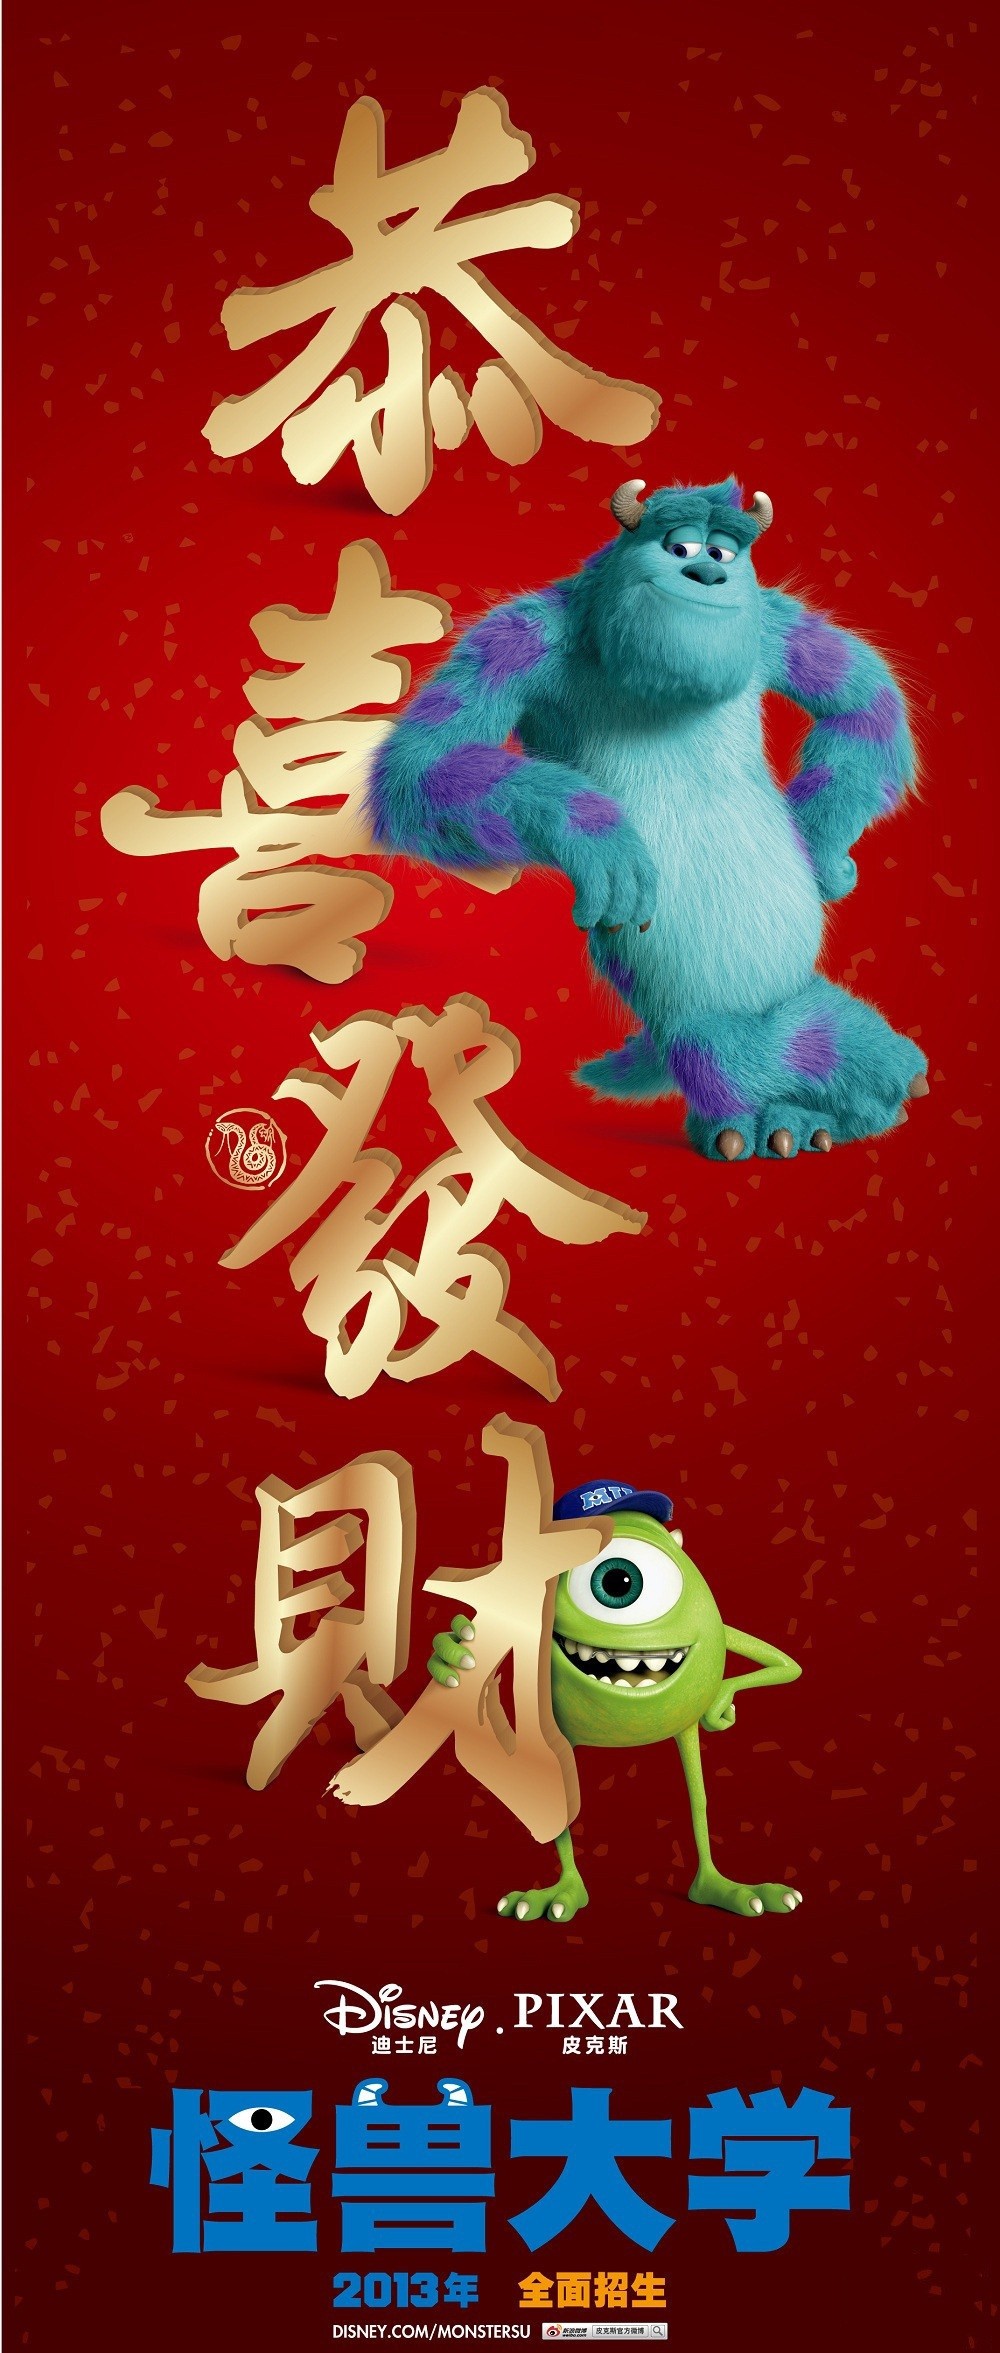 Mega Sized Movie Poster Image for Monsters University (#7 of 21)